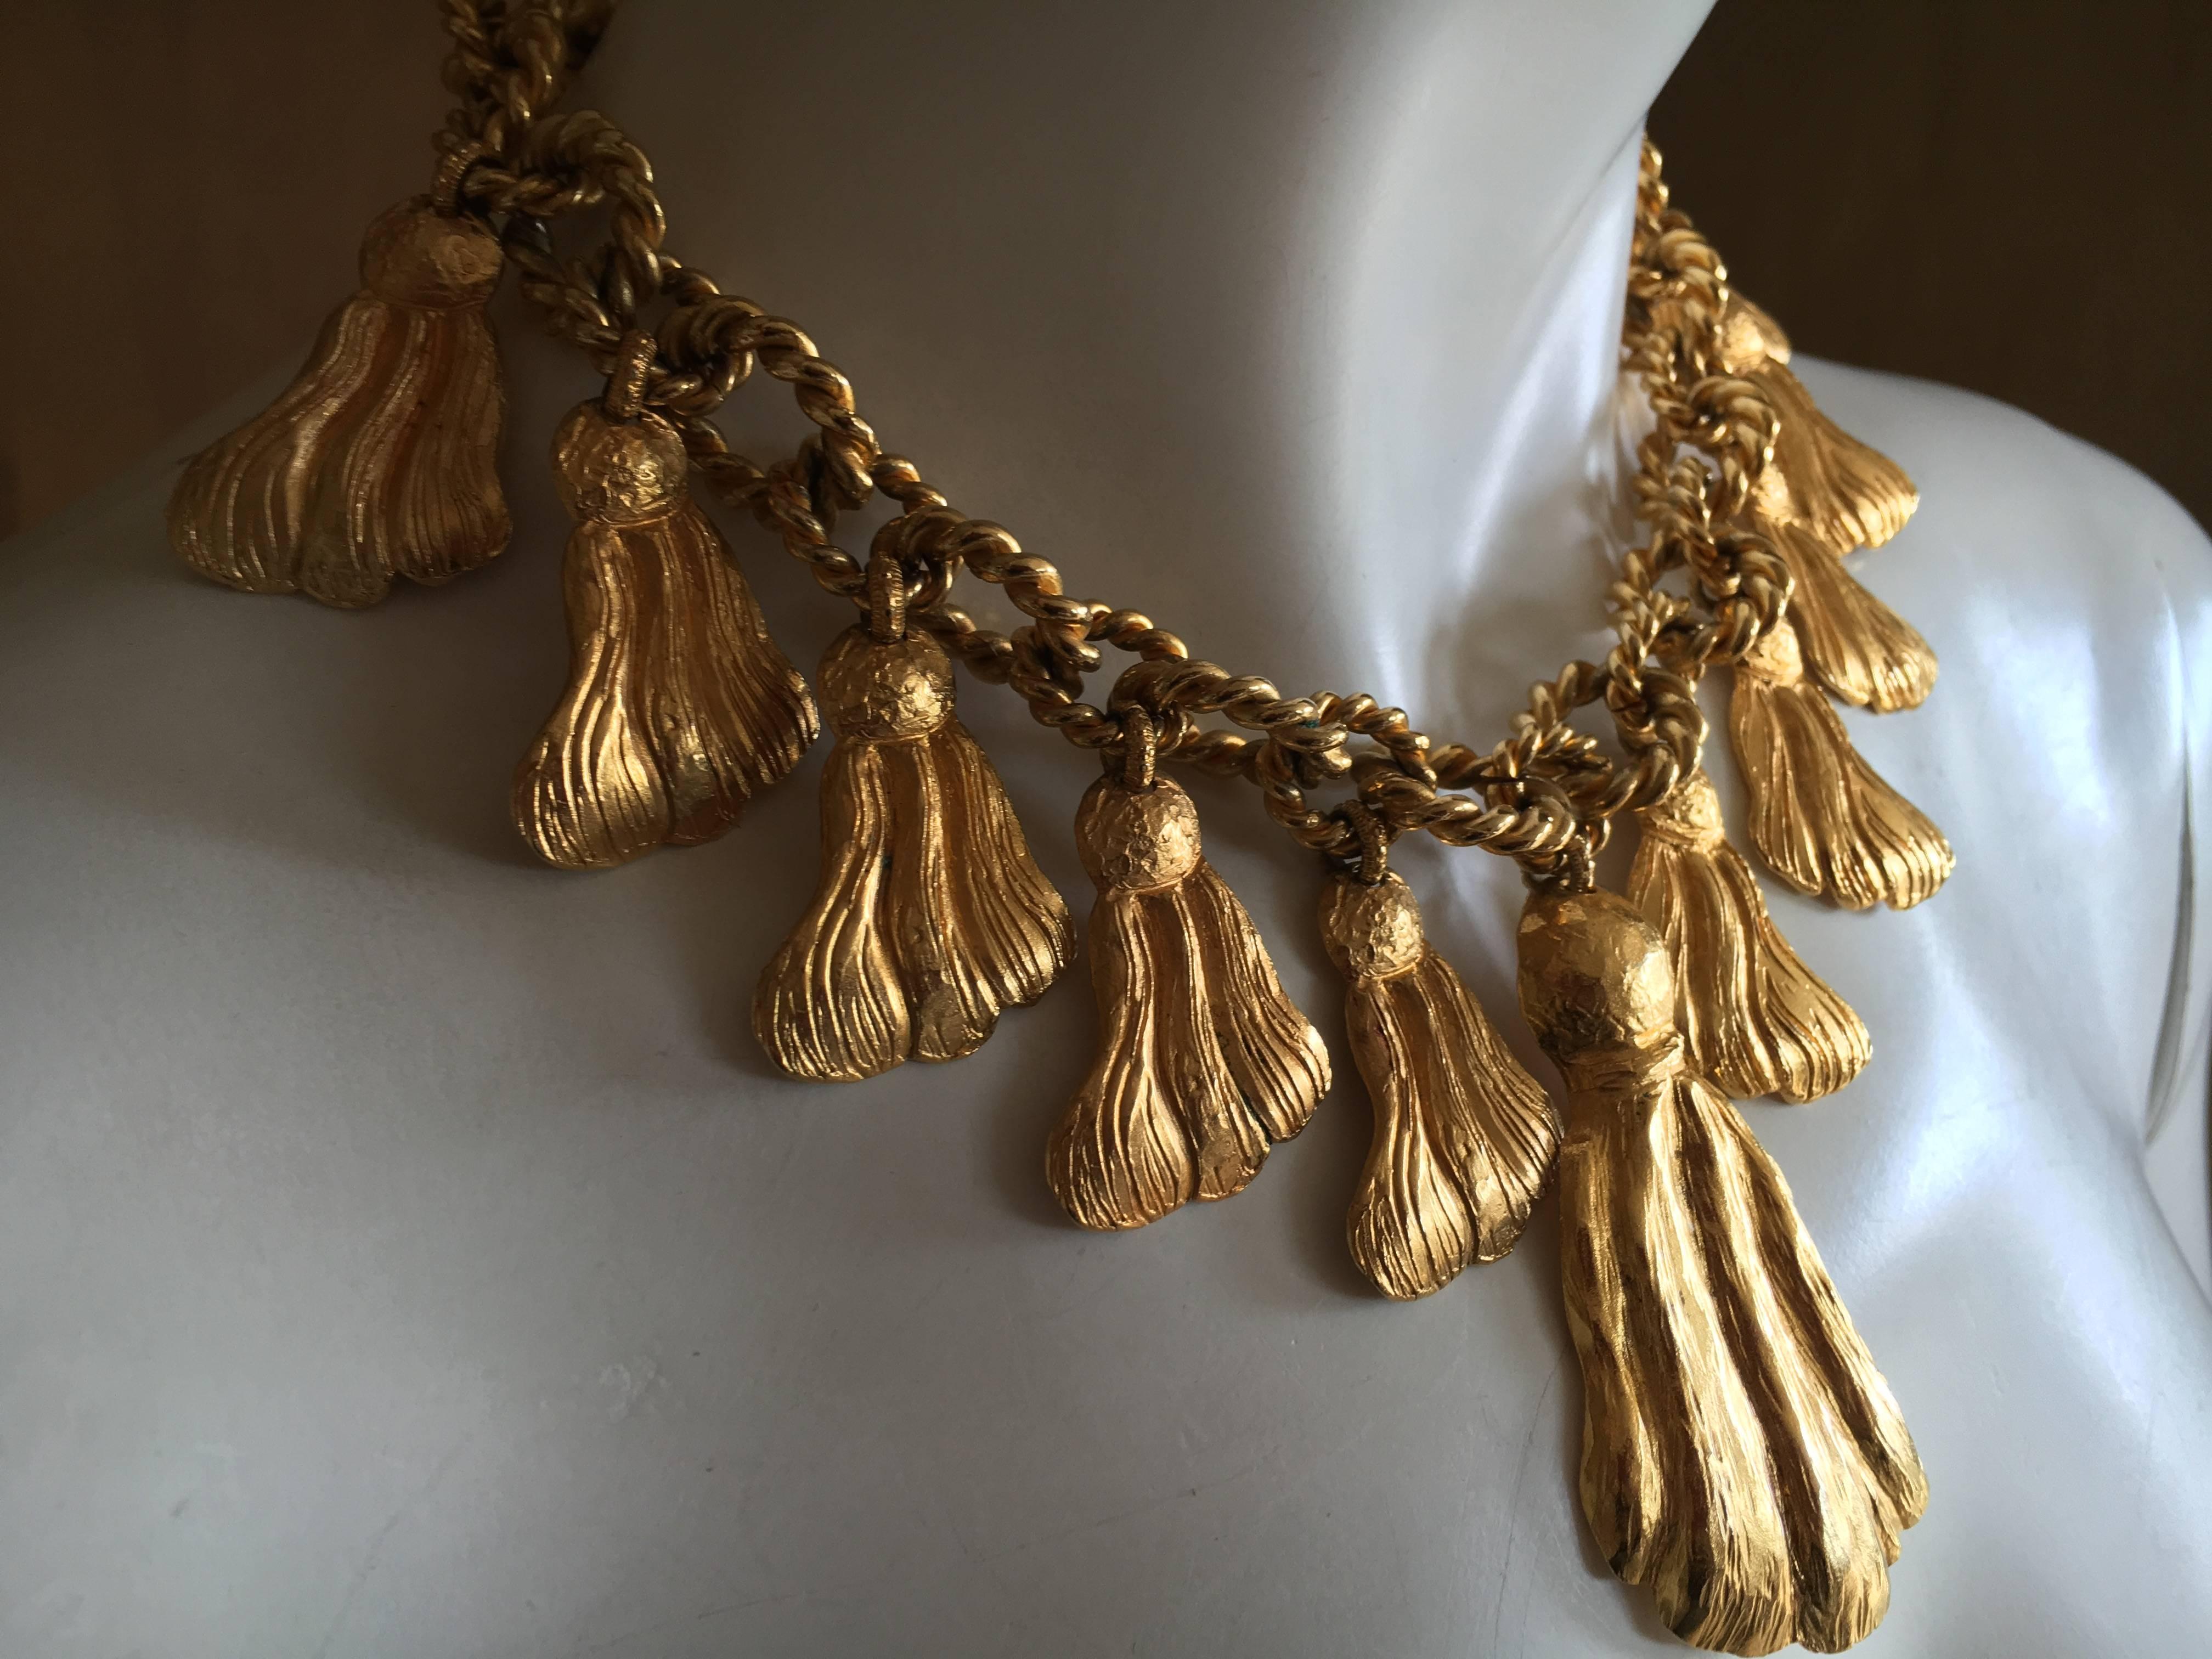 Yves Saint Laurent Rive Gauche 1970's Golden Tassel Necklace
Made in France 